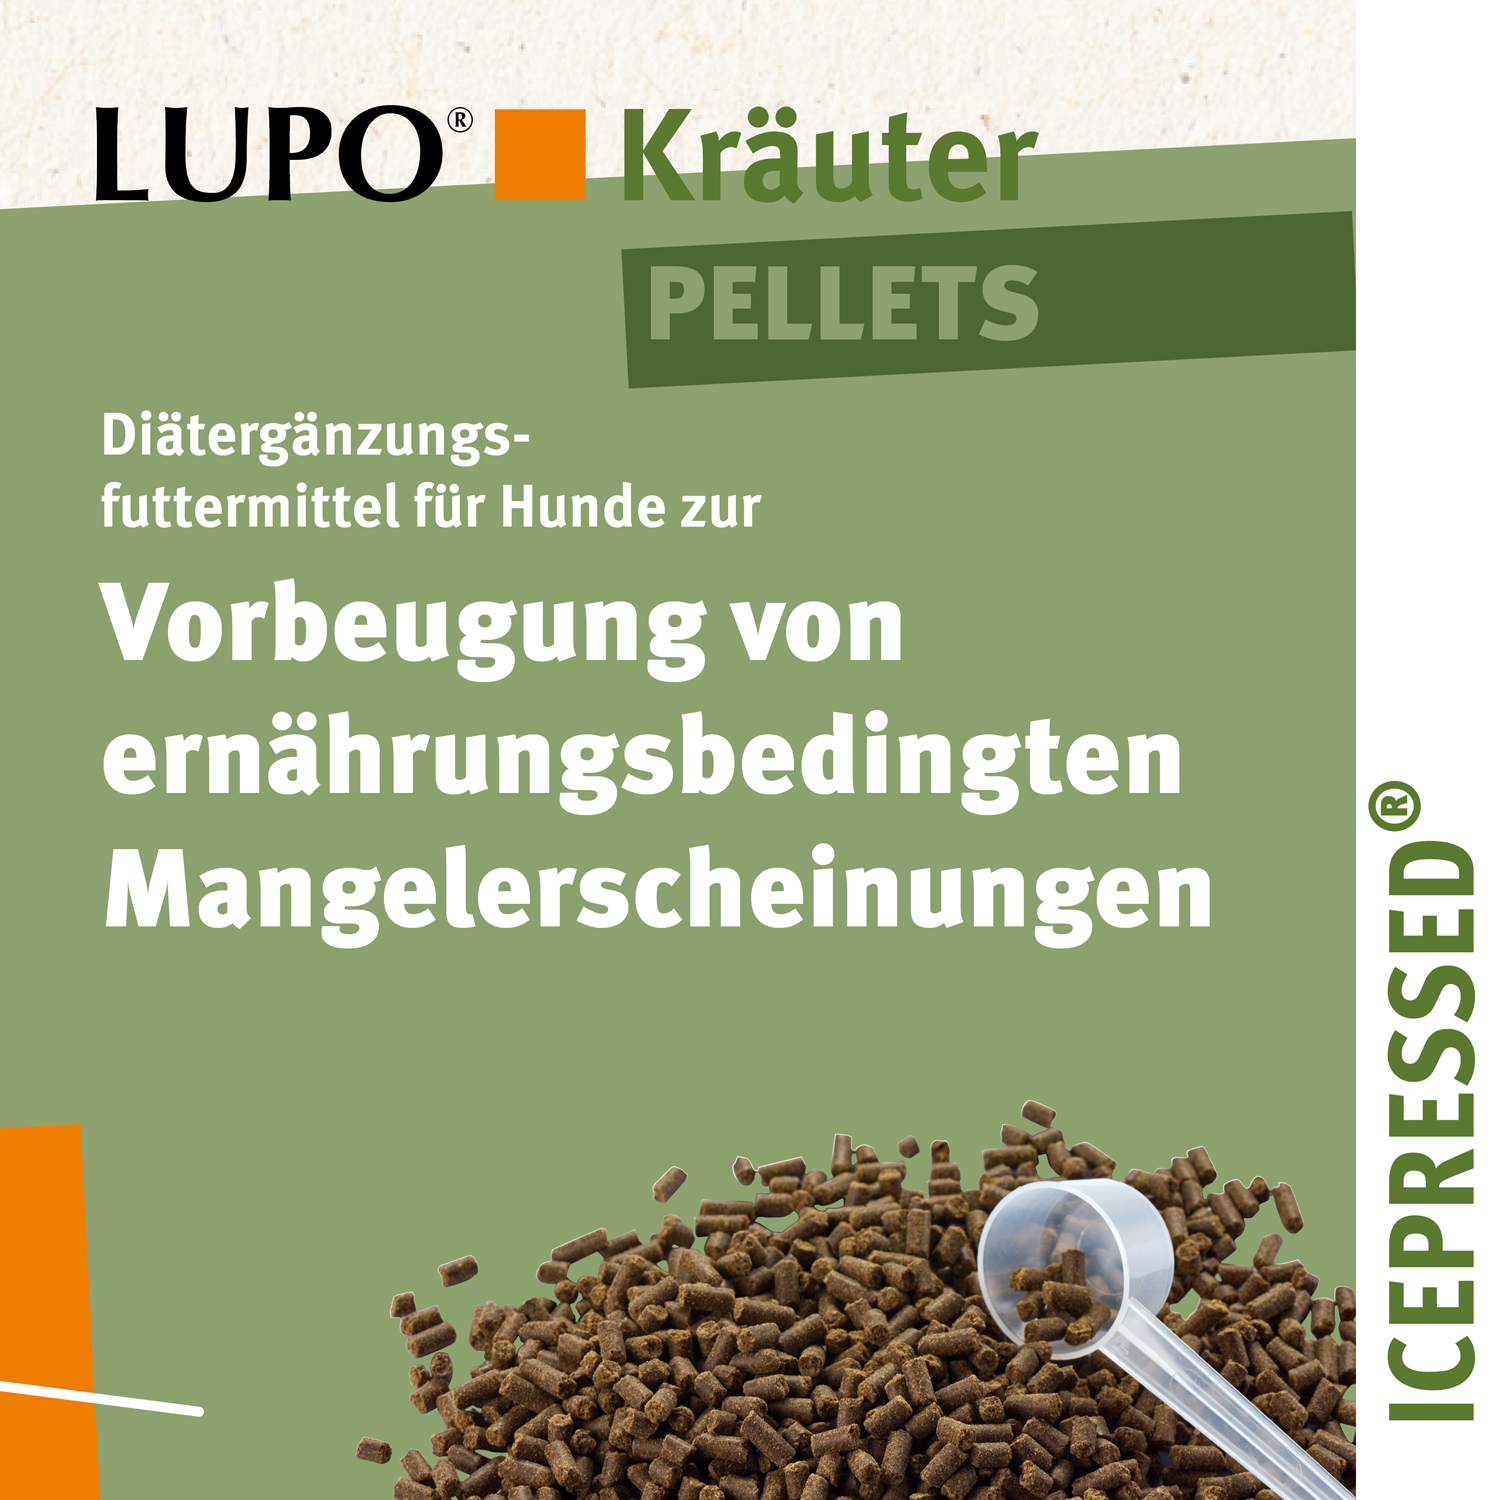 LUPO Kräuter Pellets 2,4 kg Eimer